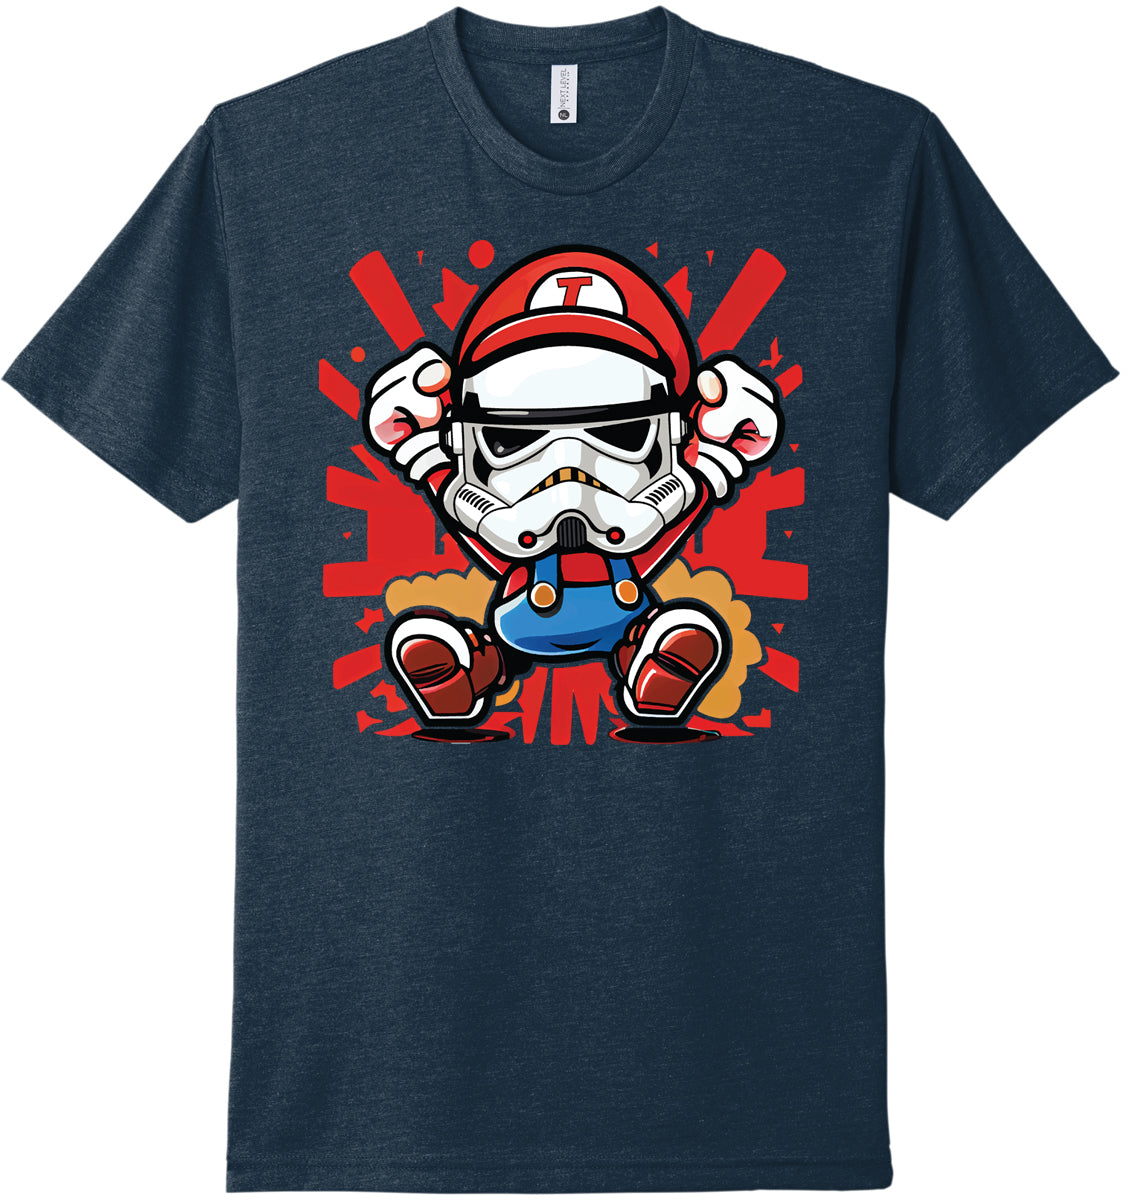 It's A Mario Trooper!